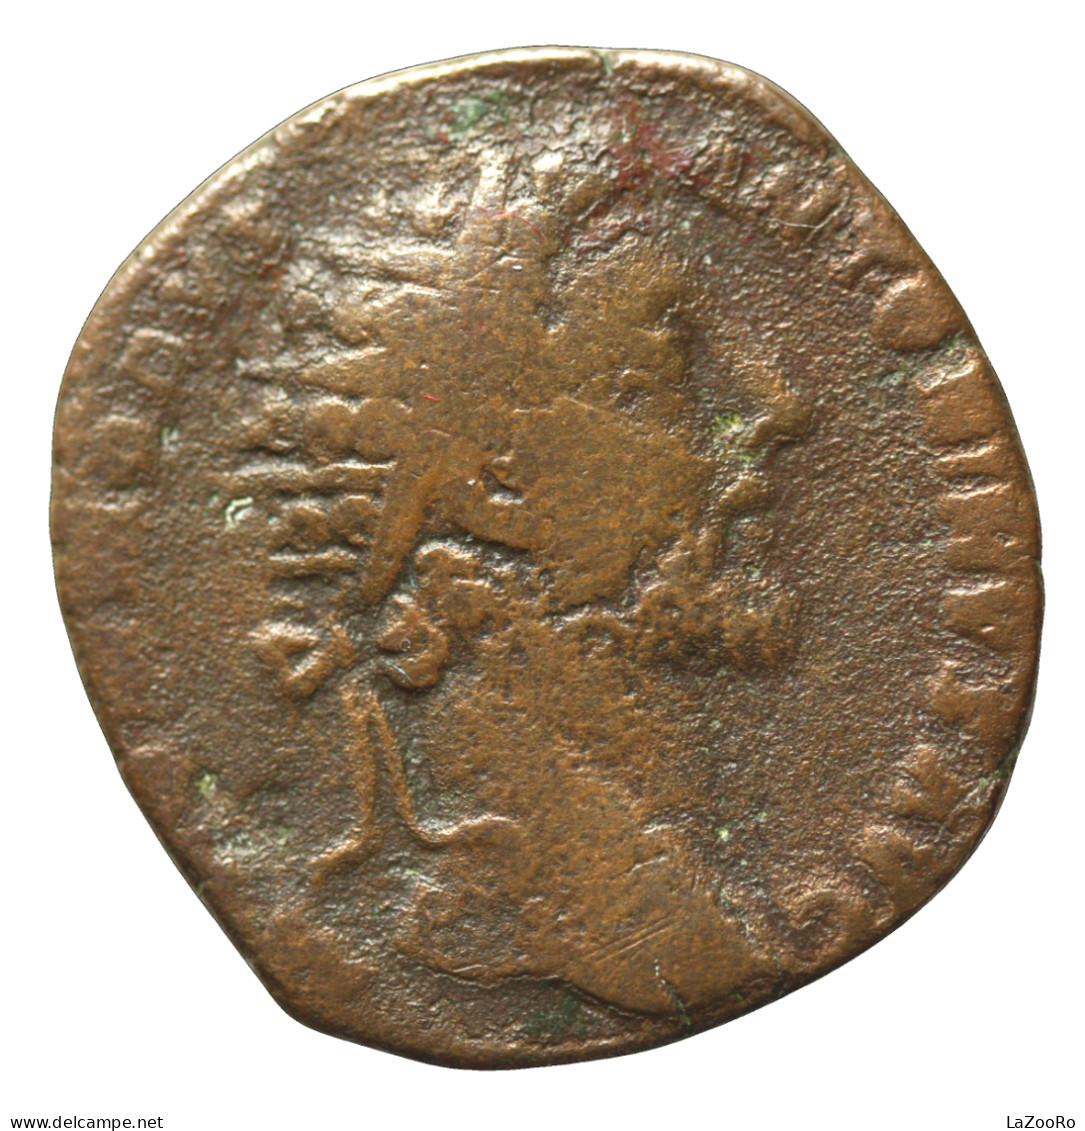 LaZooRo: Roman Empire - AE Sestertius Of Commodus (177-192 AD), Roma - La Dinastia Antonina (96 / 192)